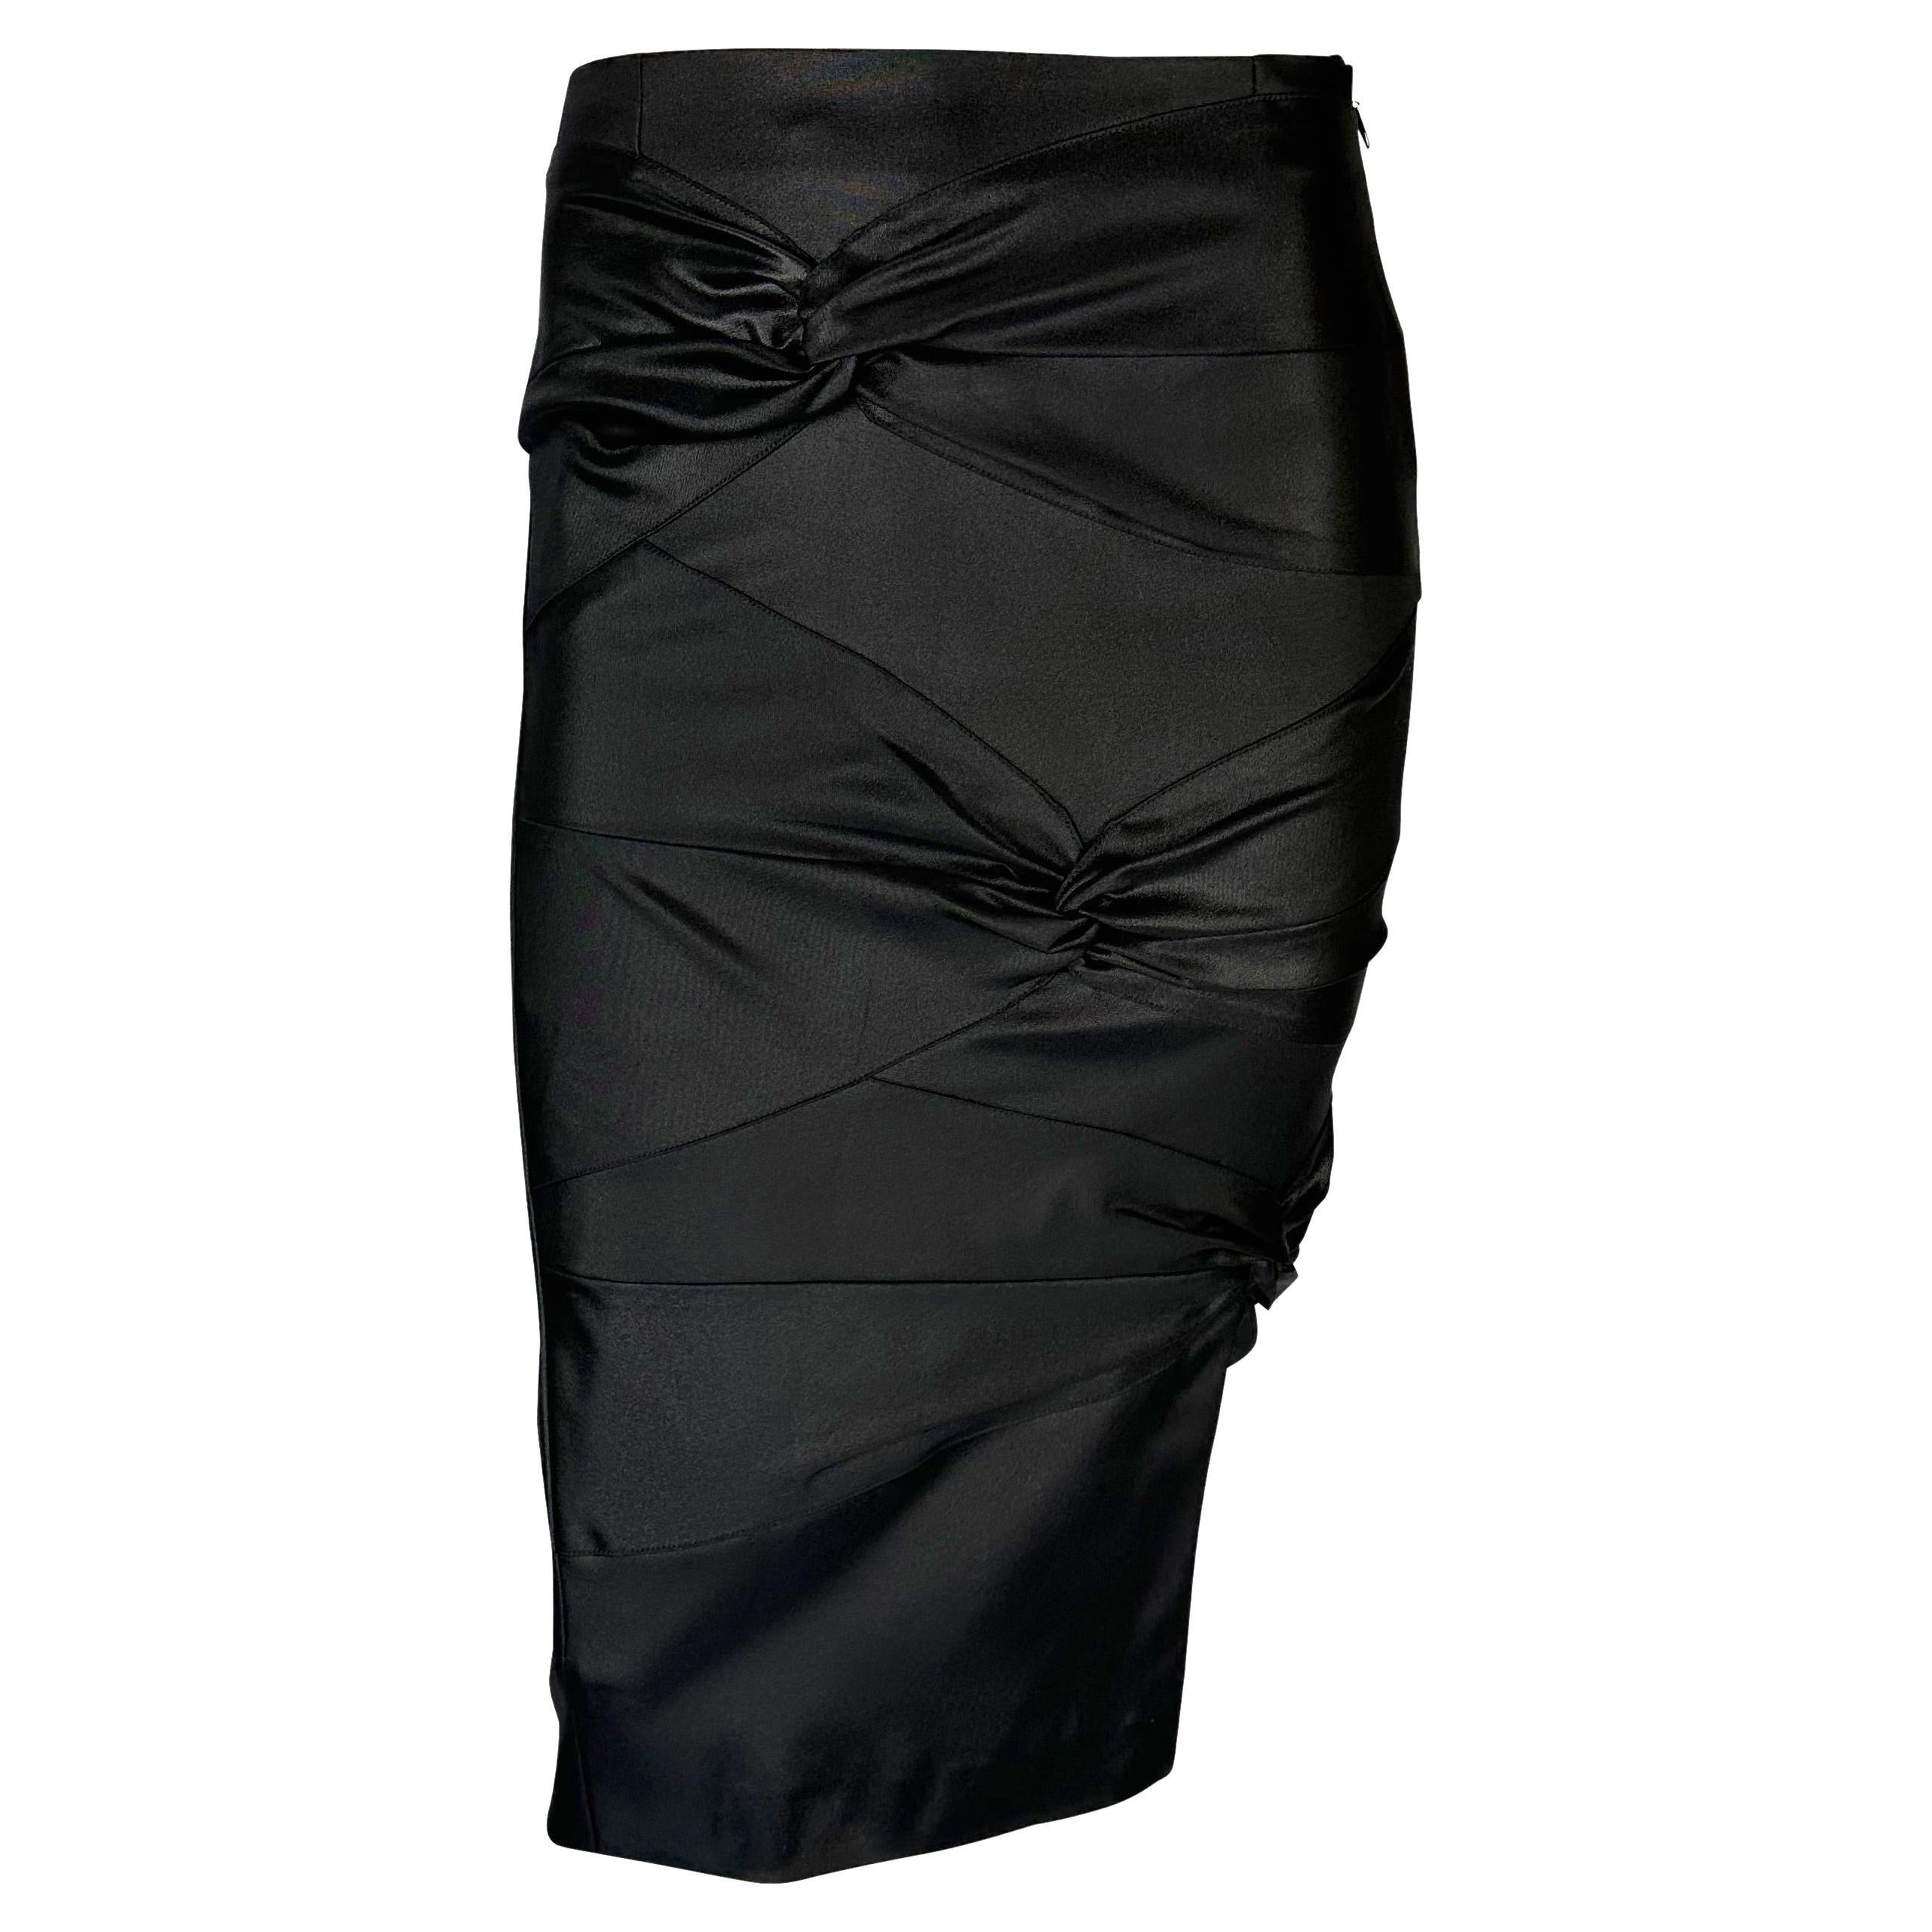 F/W 2003 Christian Dior by John Galliano for Tie Accenture Bodycon Stretch Skirt (jupe extensible avec nœud de cravate) en vente